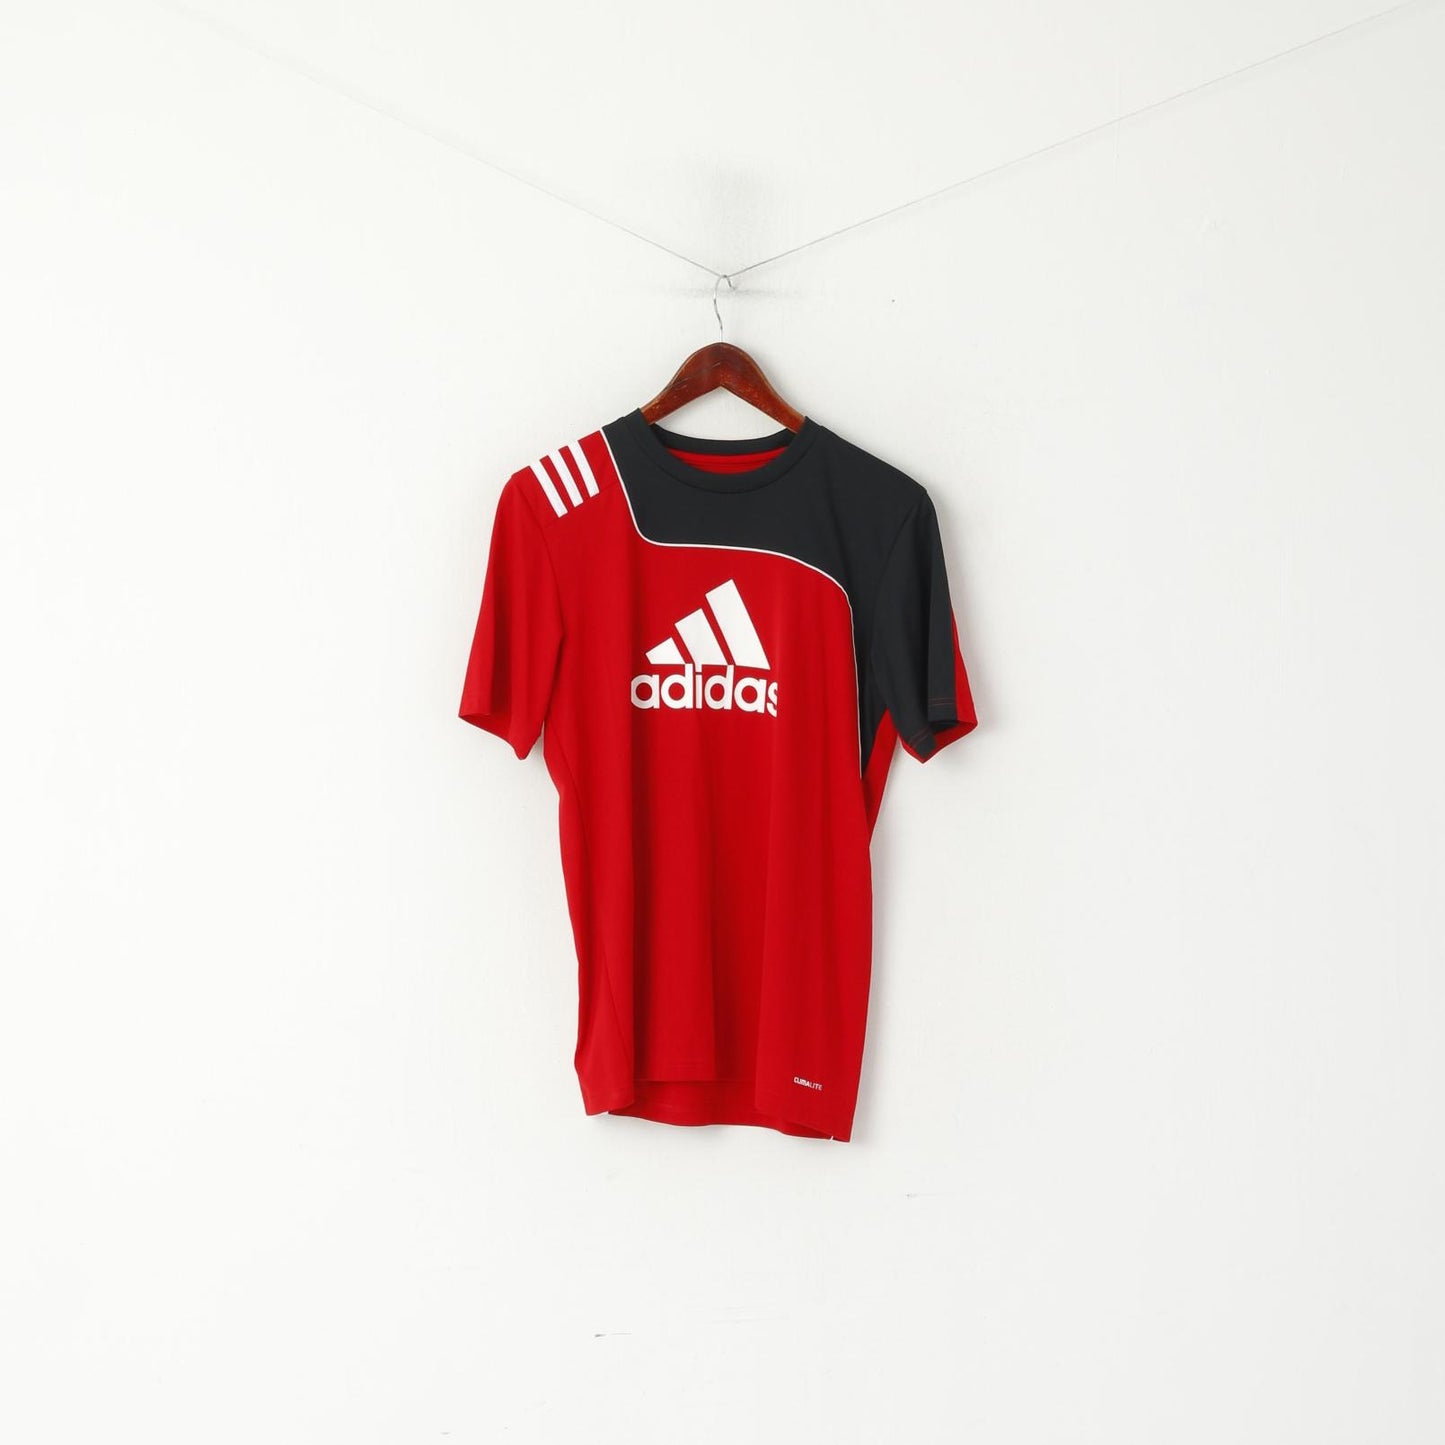 Adidas Youth 15-16 ans 176 Maillot d'entraînement de football rouge avec grand logo